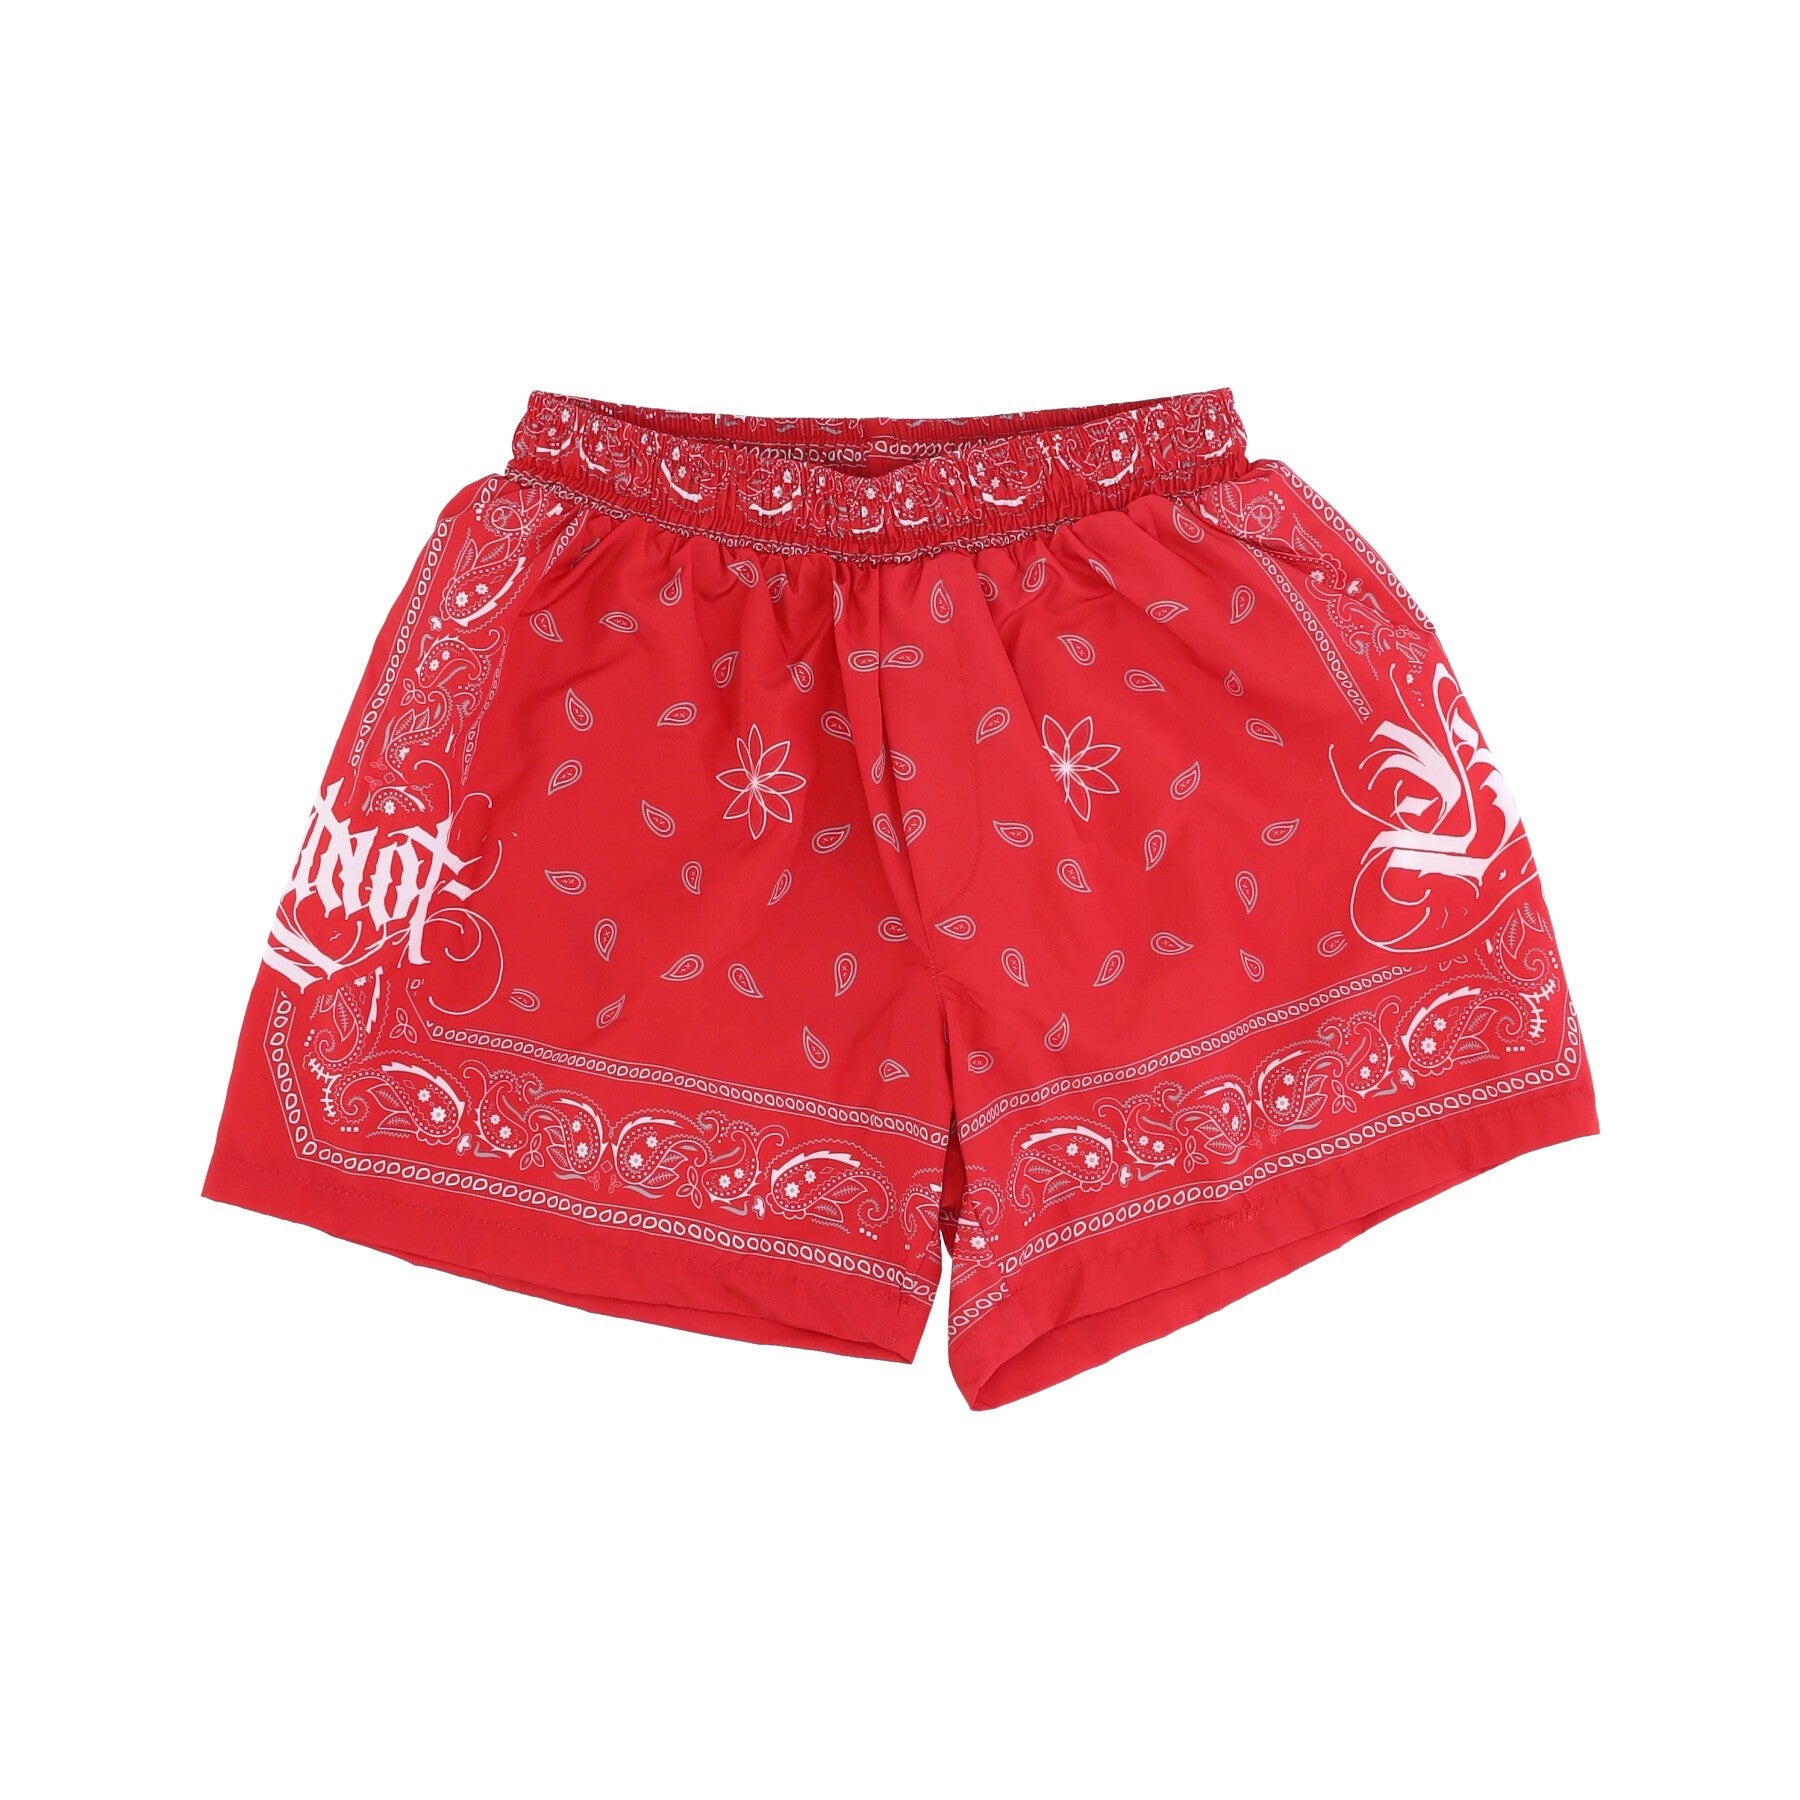 Men's Bandana Swimsuit Red Costume Shorts